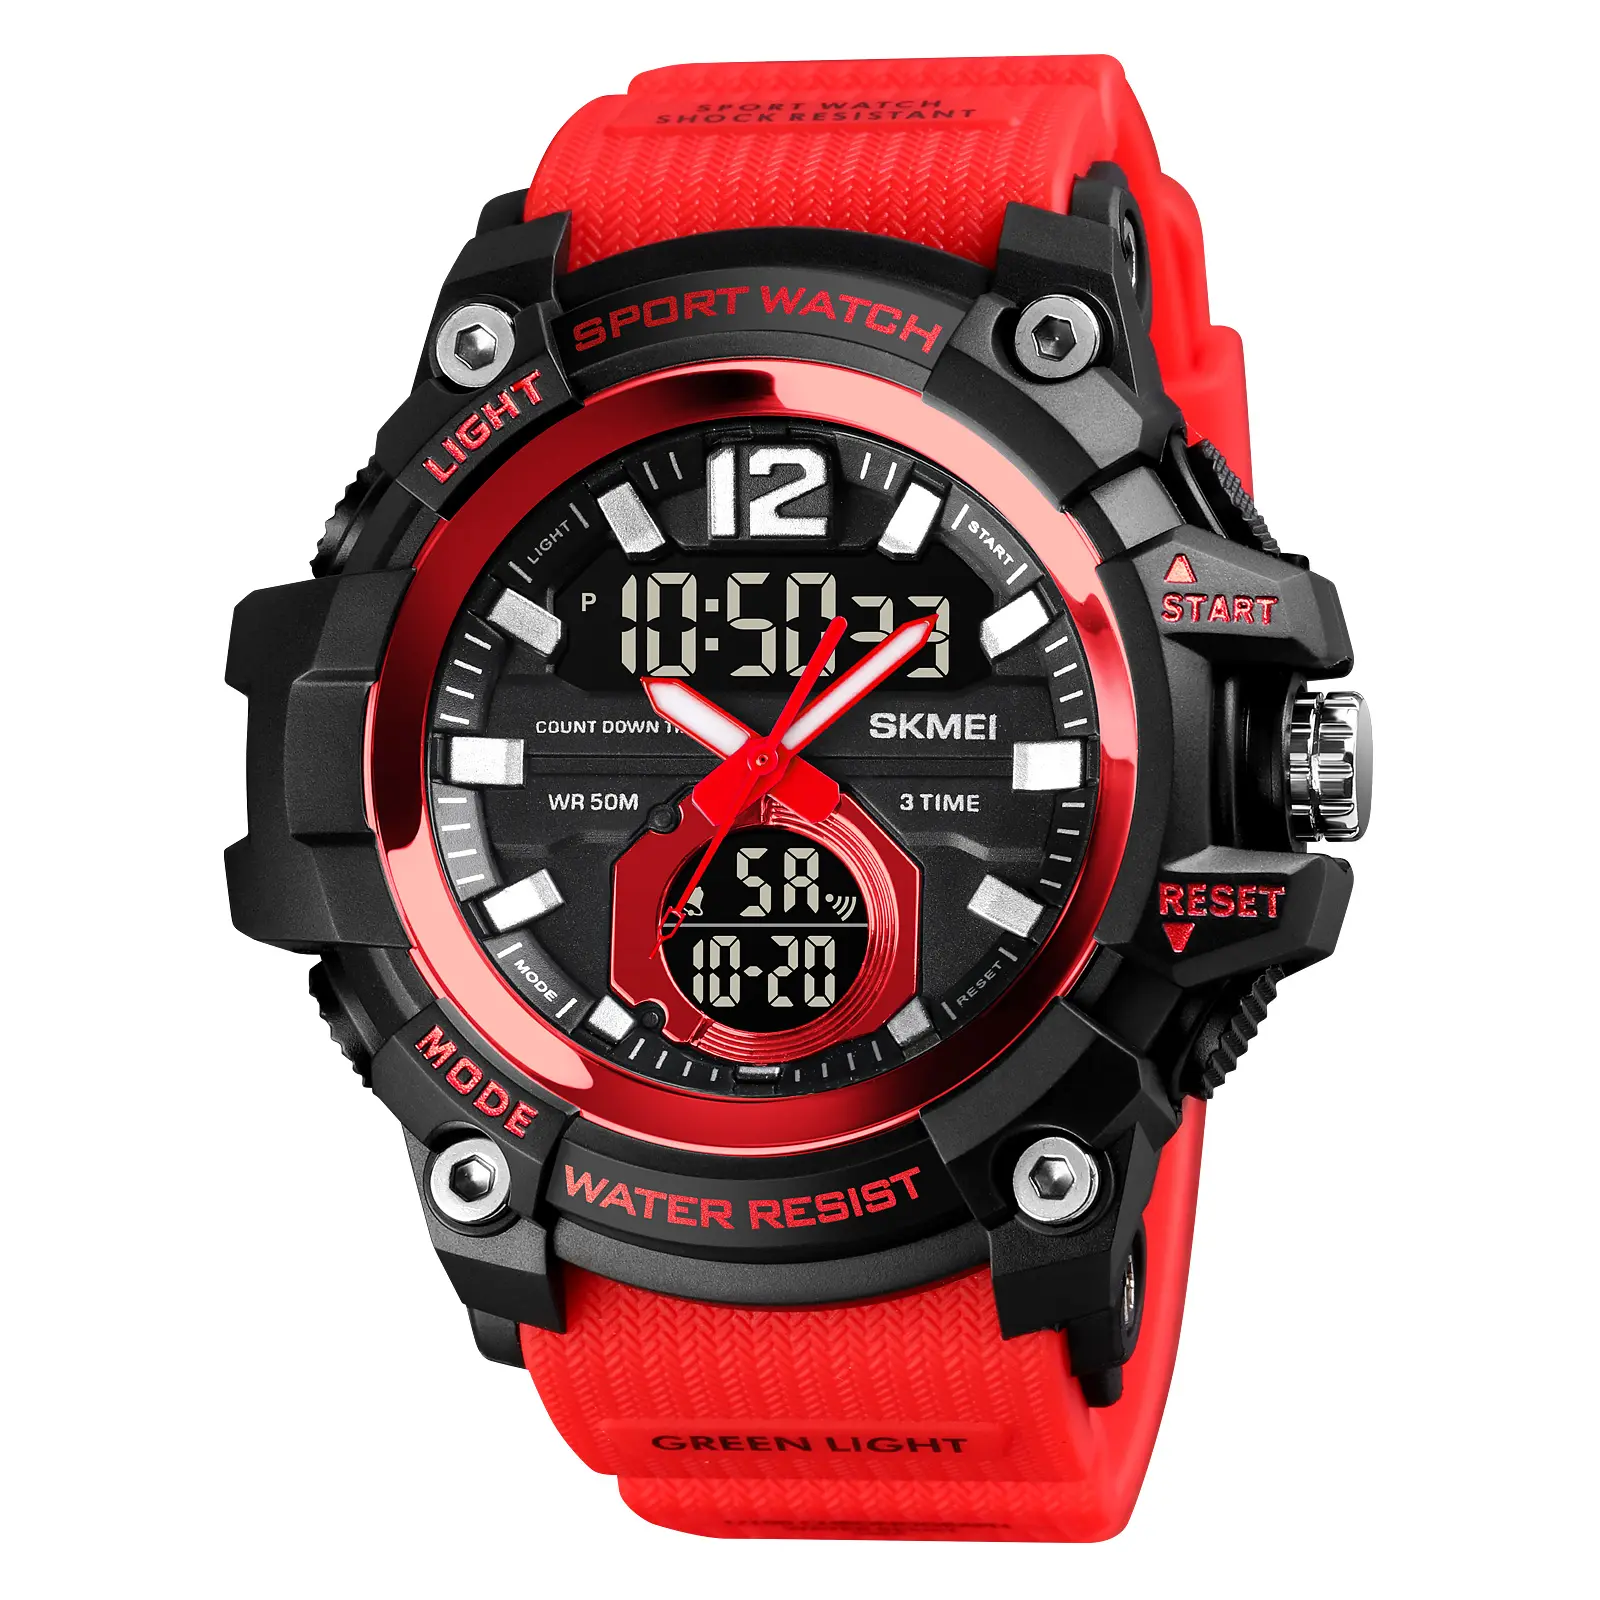 NEW skmei 1725 digital men black waterproof alarm watch sports watches made in china